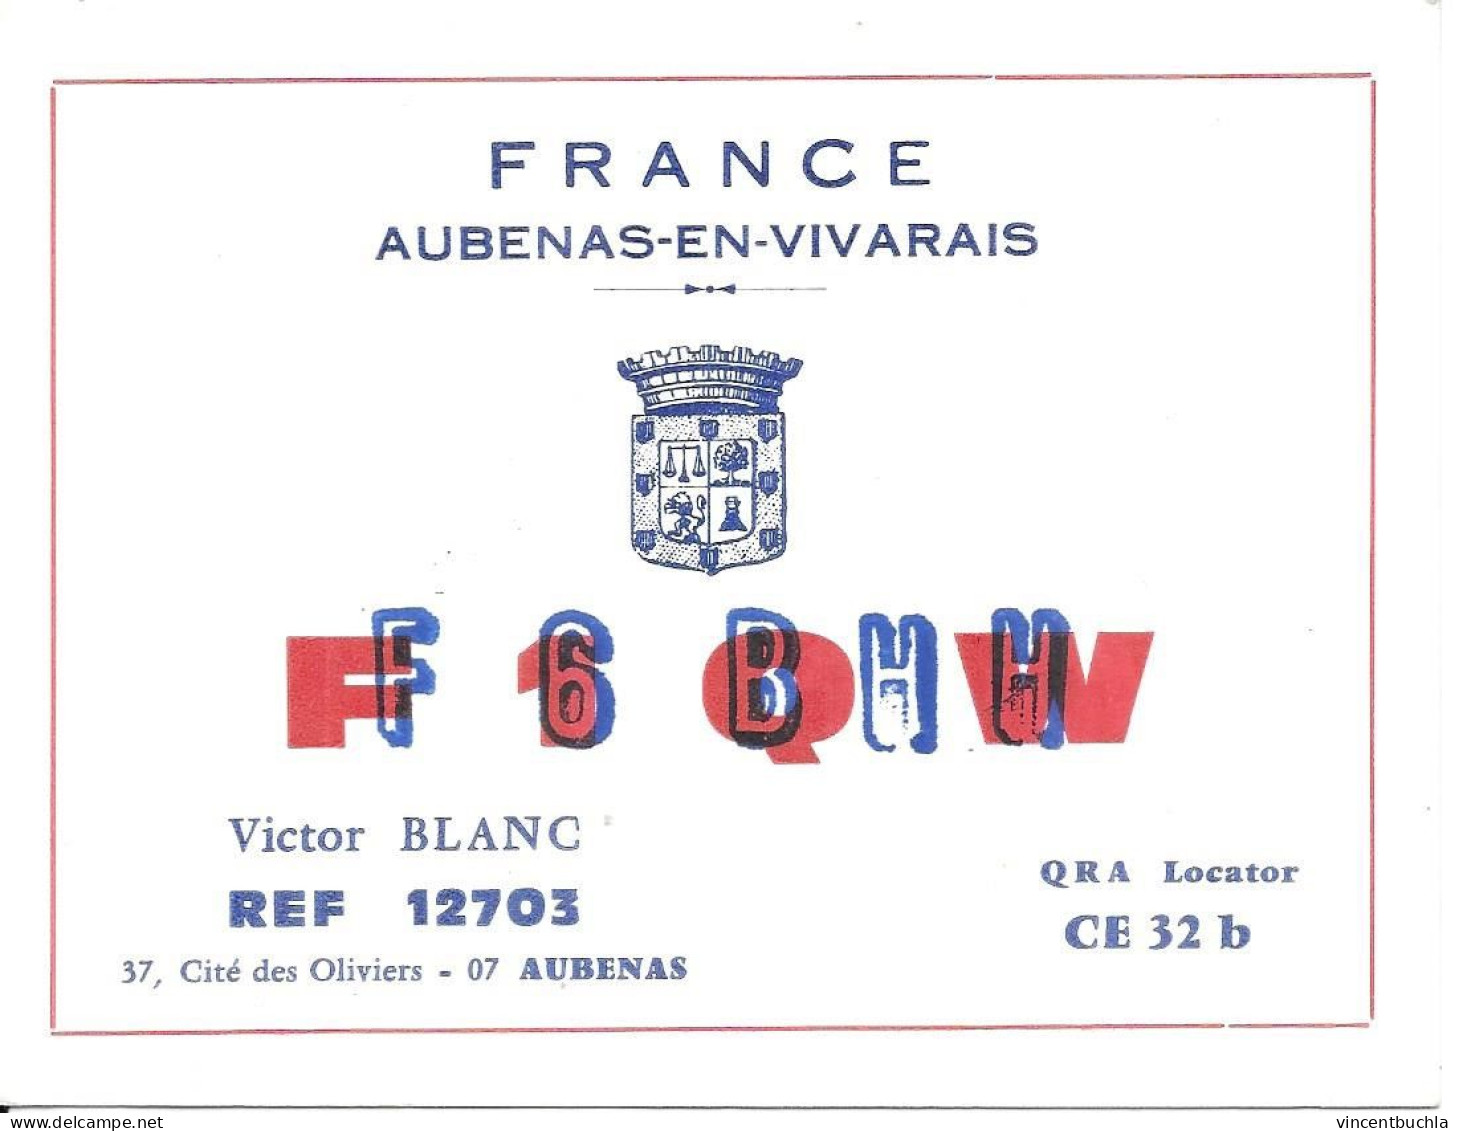 Carte QSL F6 BHH Aubenas En Vivarais 22 Juillet 1973 Victor Blanc France - Radio Amatoriale